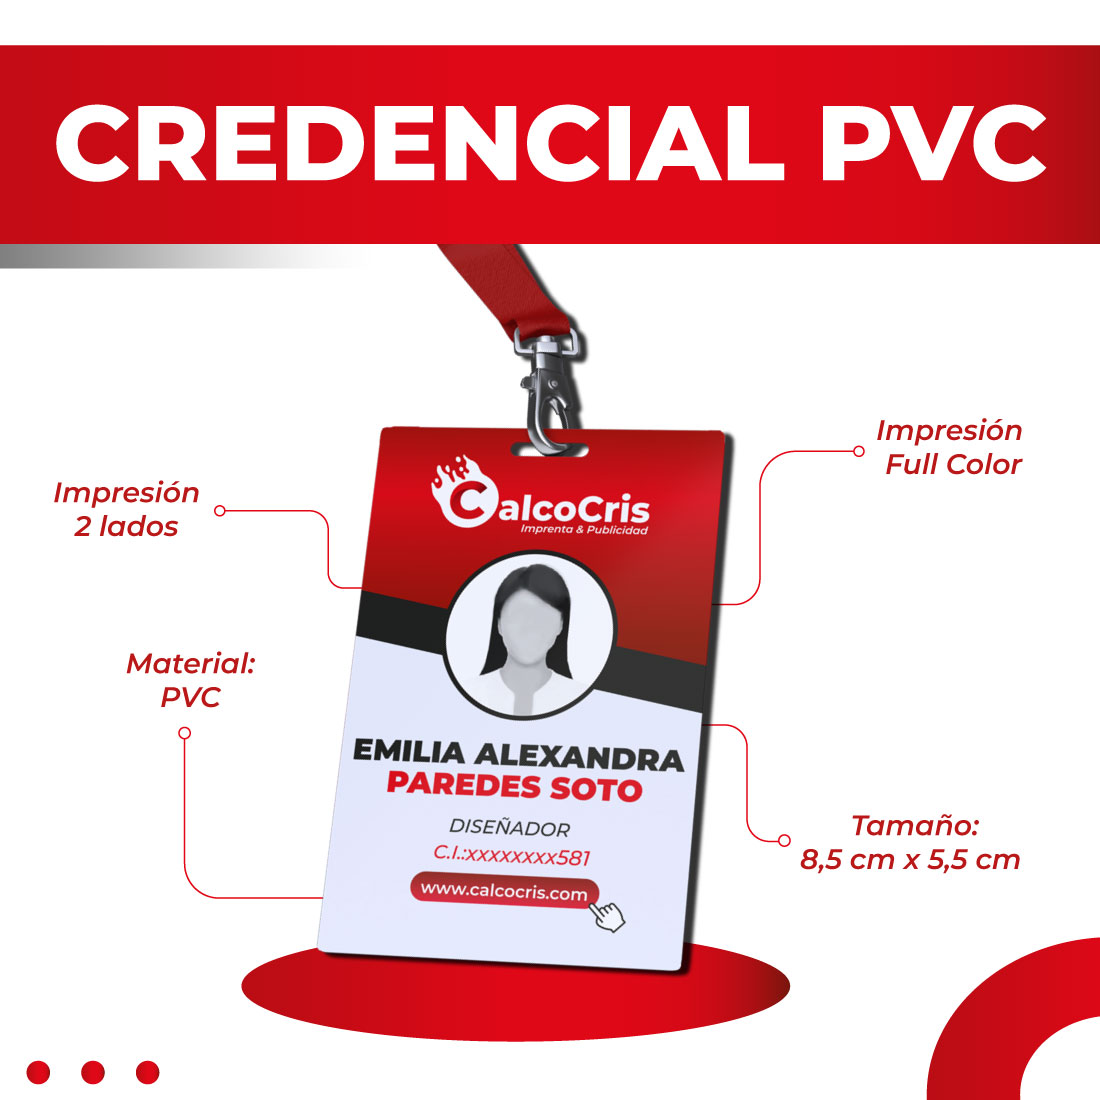 Credencial-pvc-calcocris-03